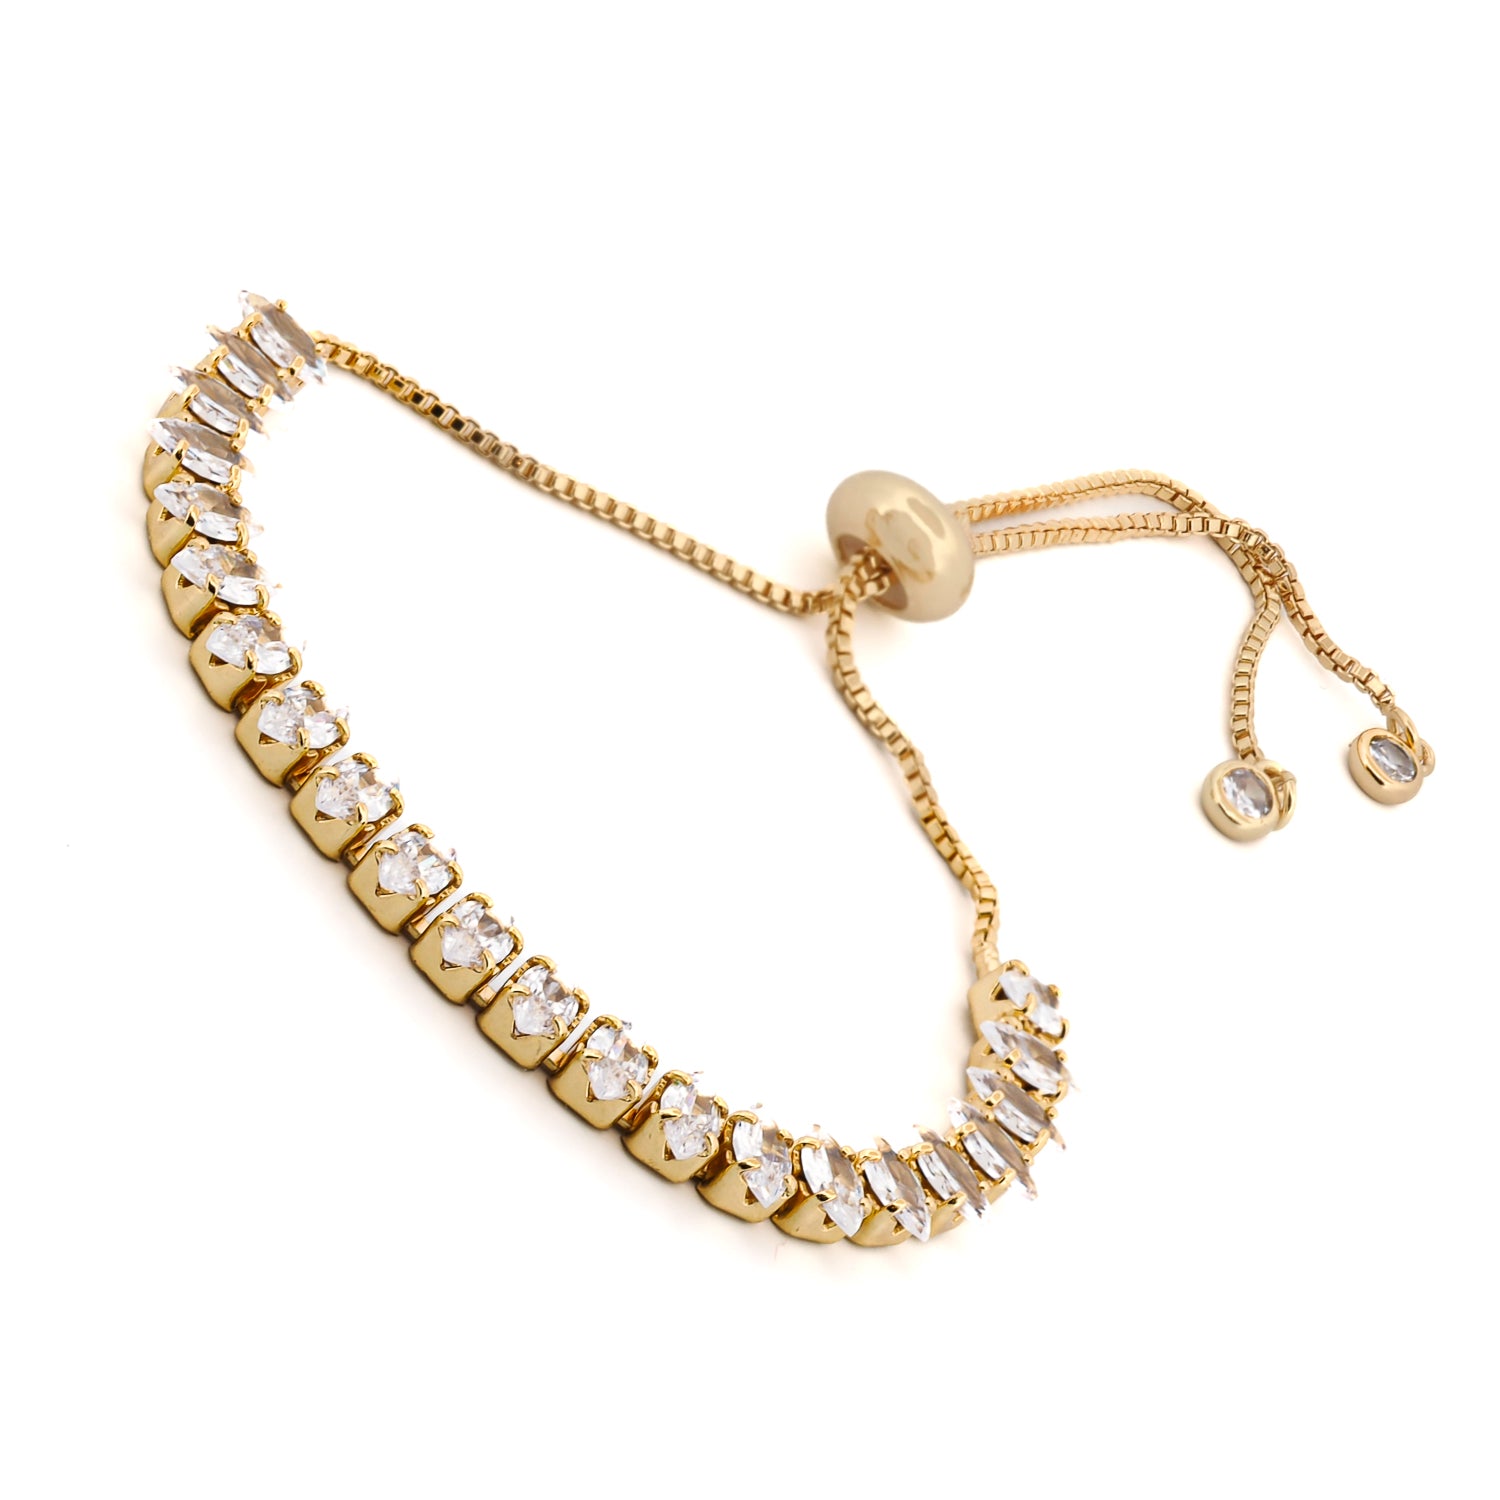 Modern Sophistication: Gold and Diamond Bracelet